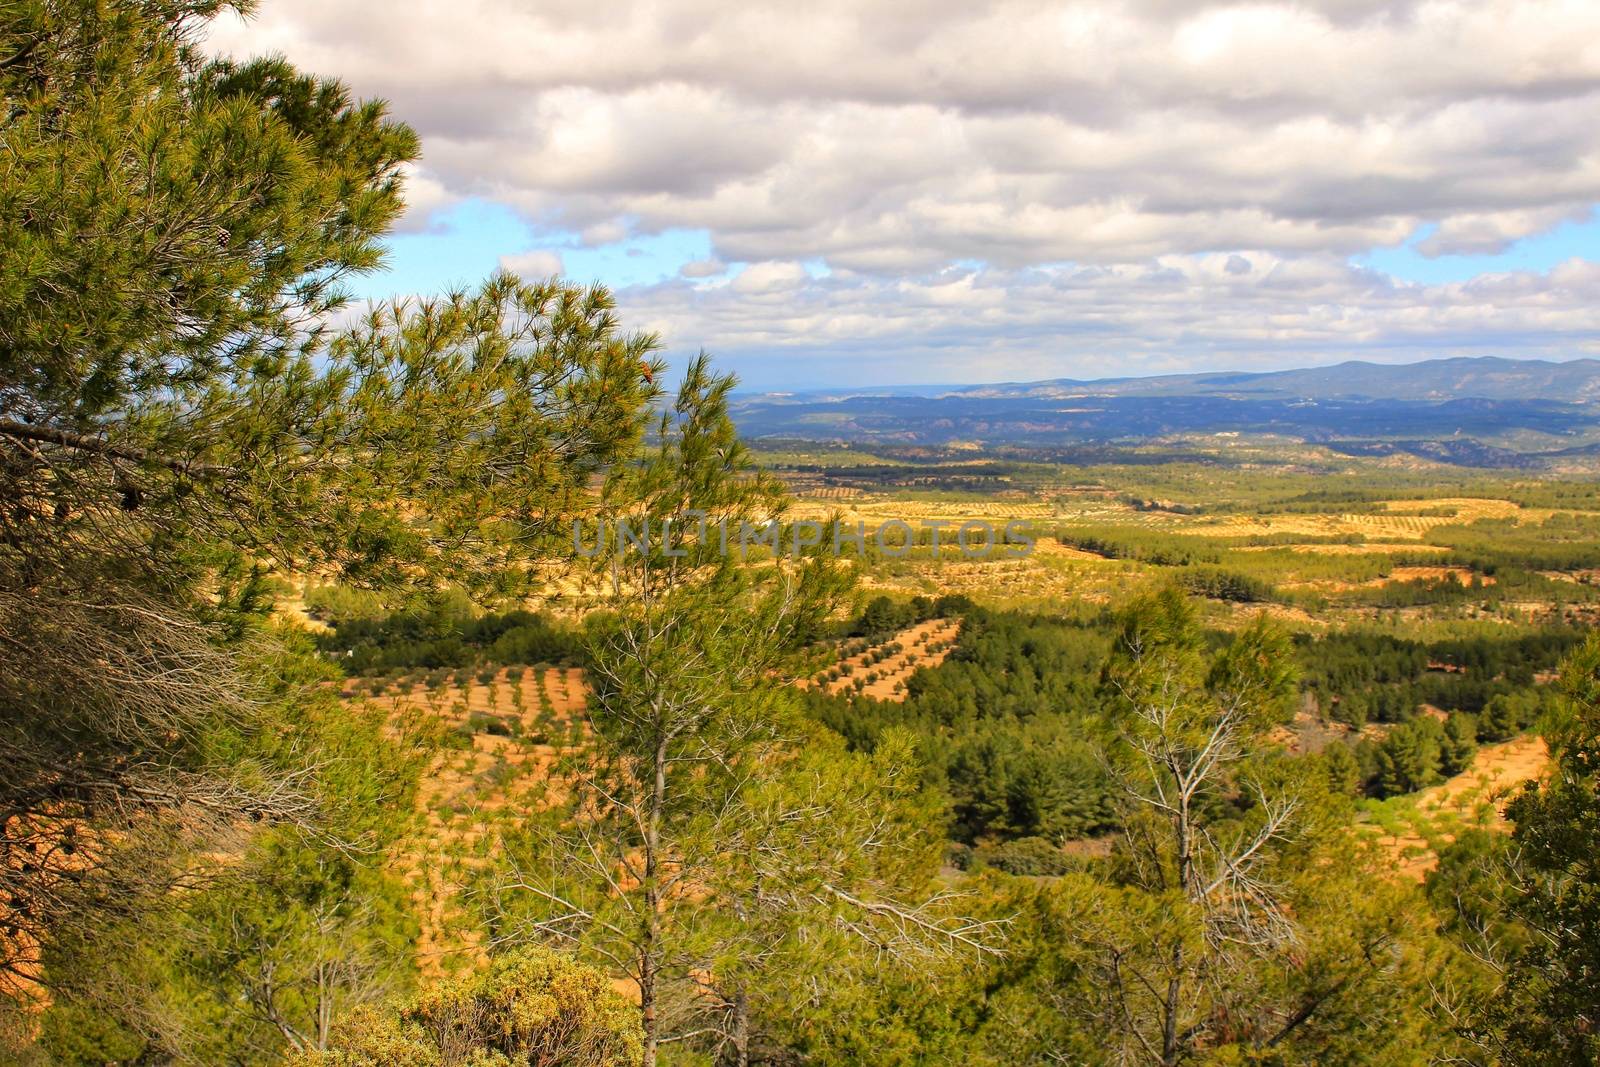 Landscape of the Sierra of Utiel Requena in Valencia, Spain by soniabonet